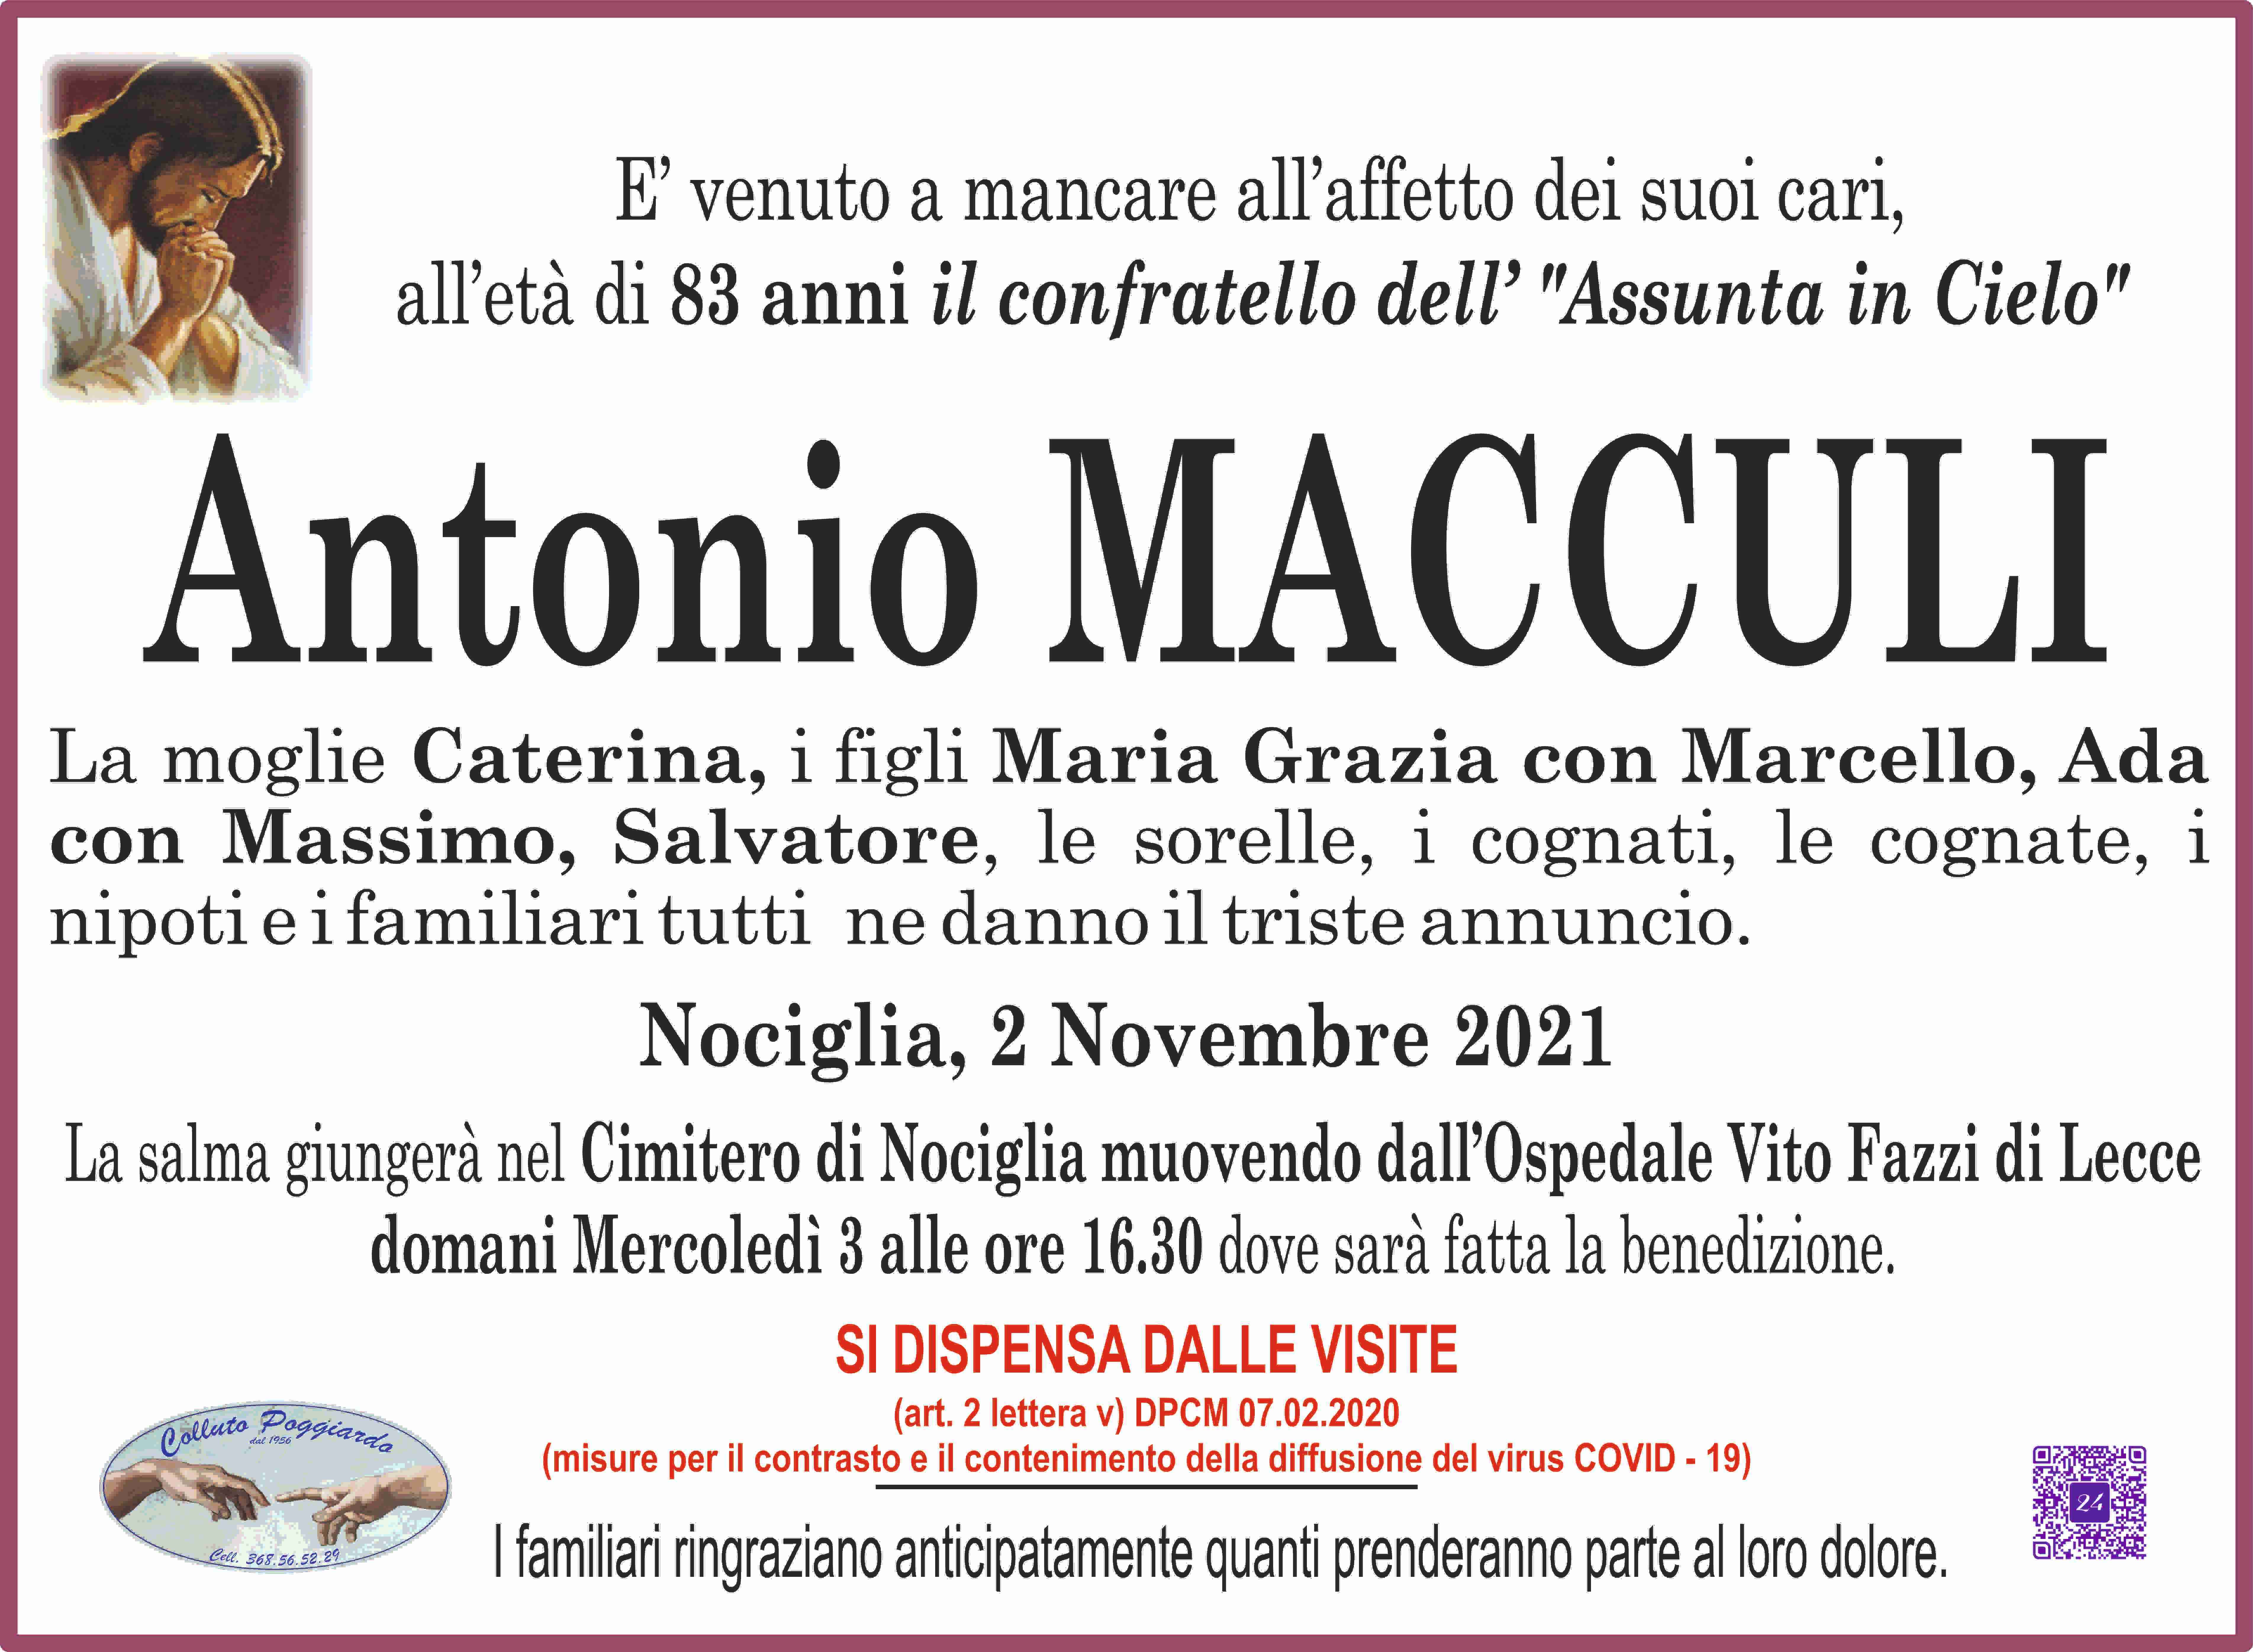 Antonio Macculi